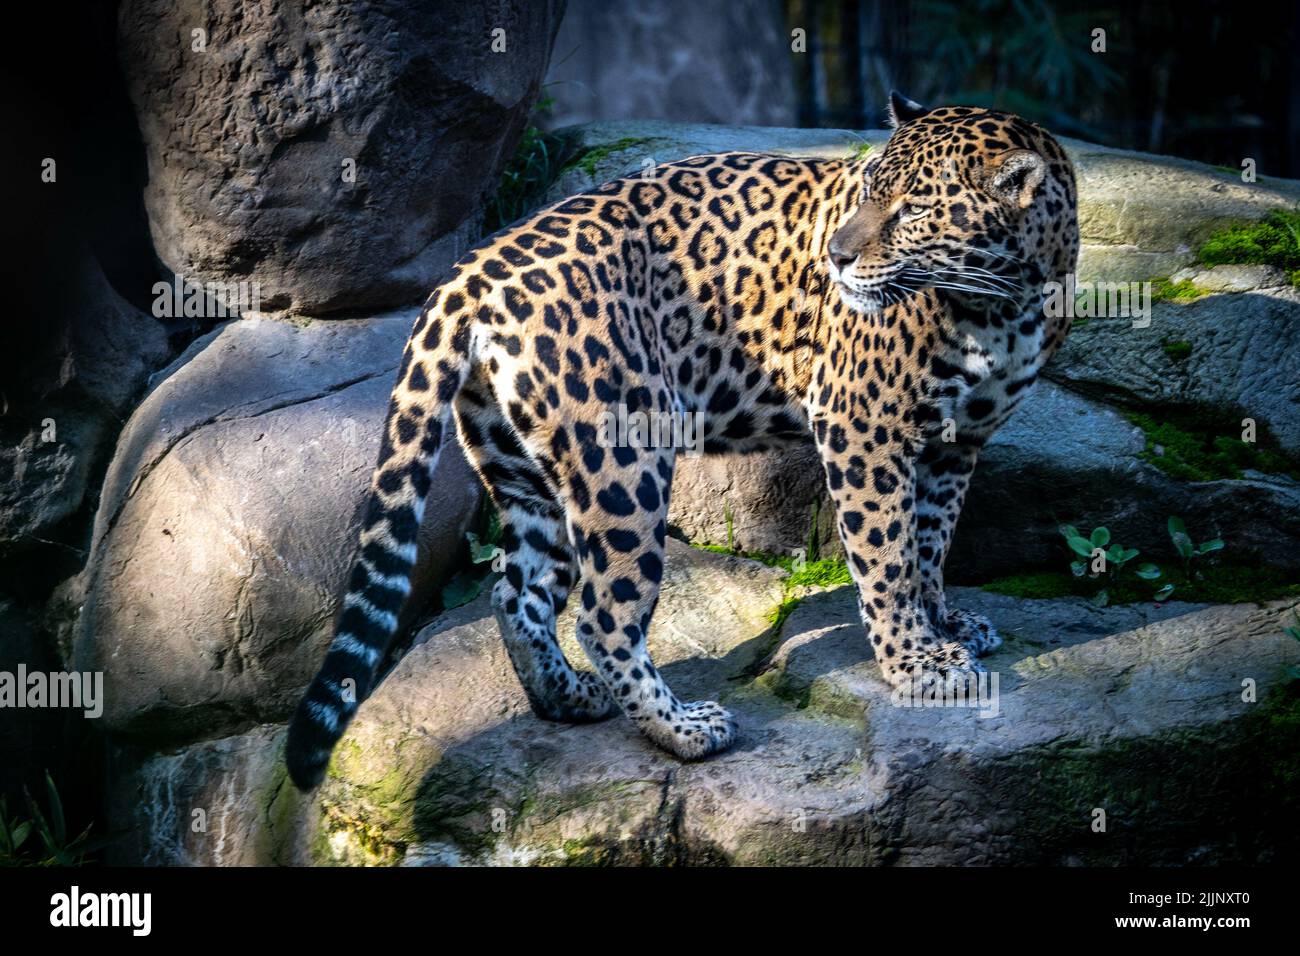 Jaguar predator hi-res stock photography and images - Alamy